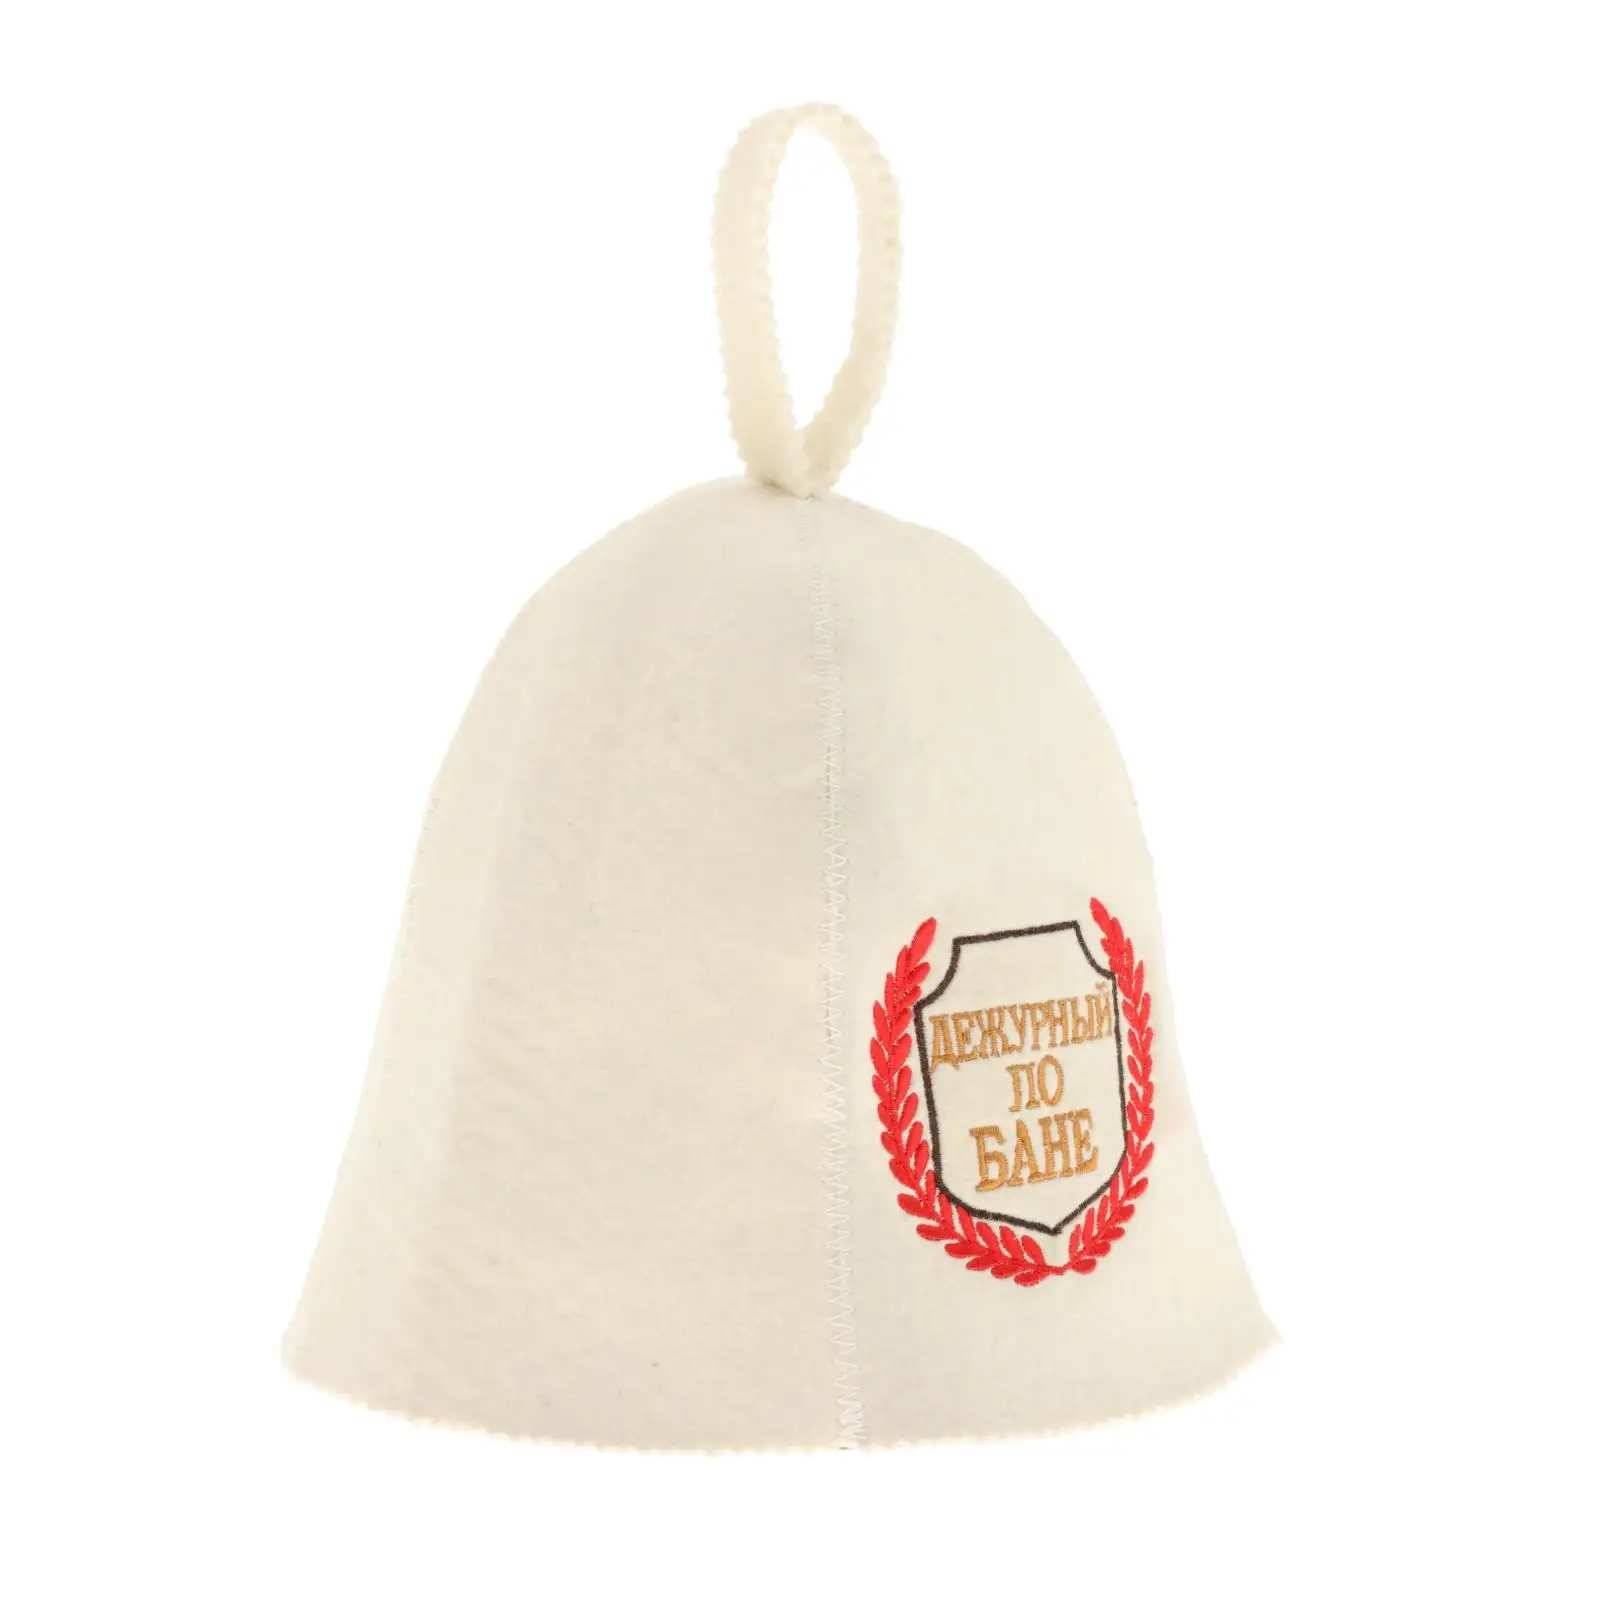 Pure Wool Felt Sauna Hat Banya Cap Head Protection for Shower Sauna Banya